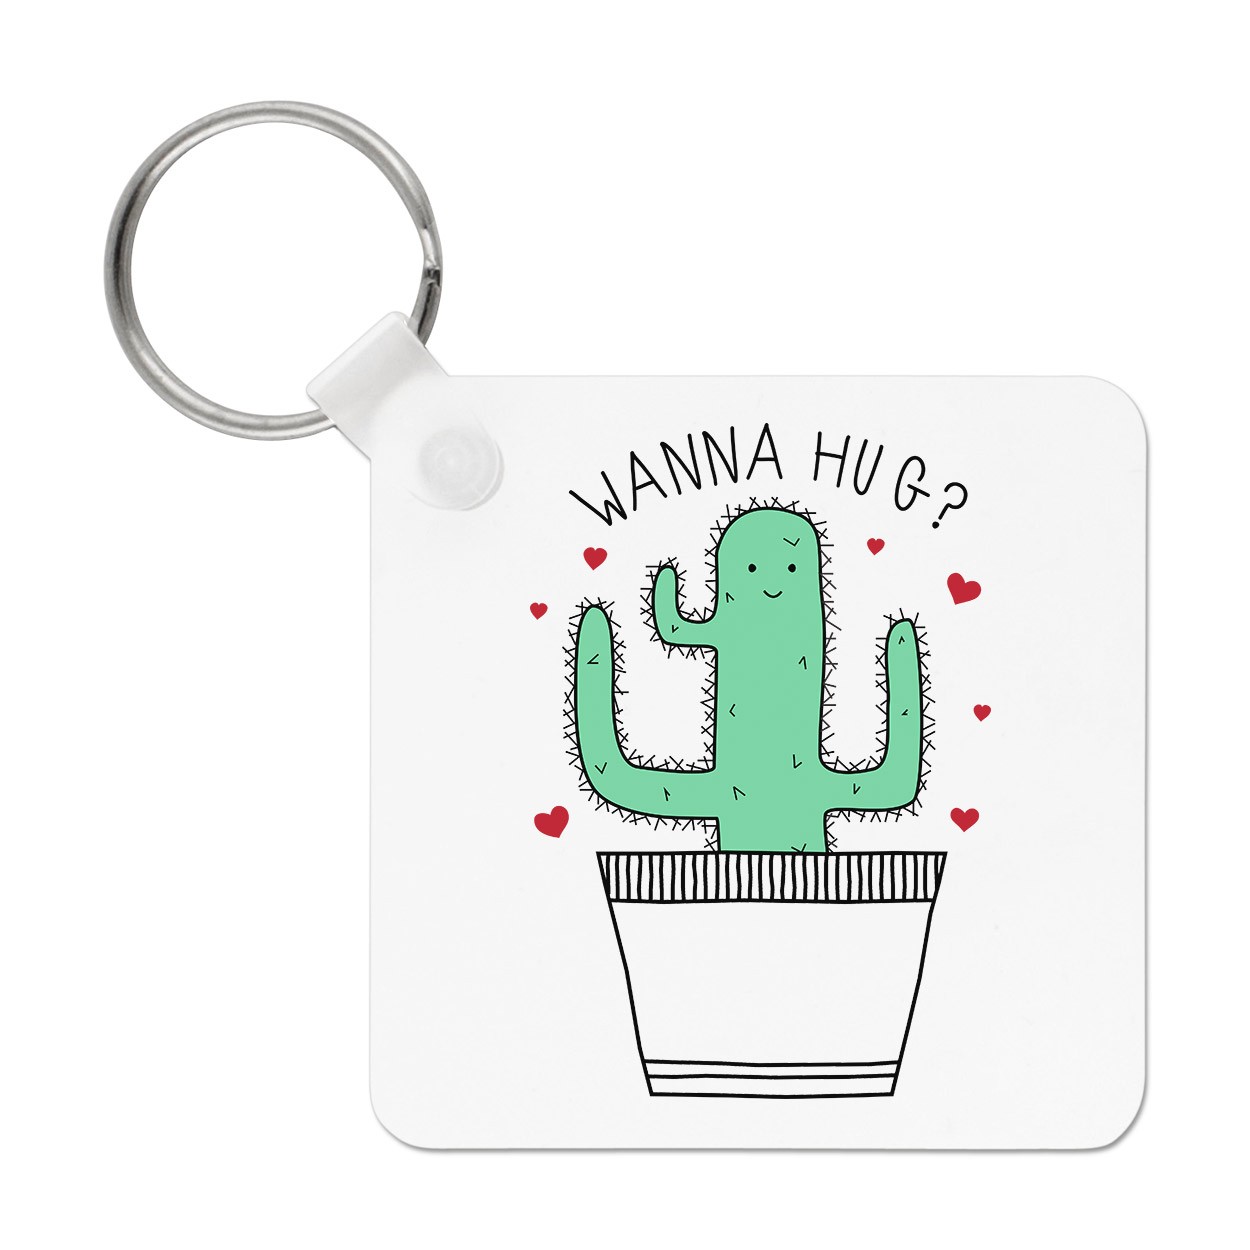 Cactus Wanna Hug Keyring Key Chain